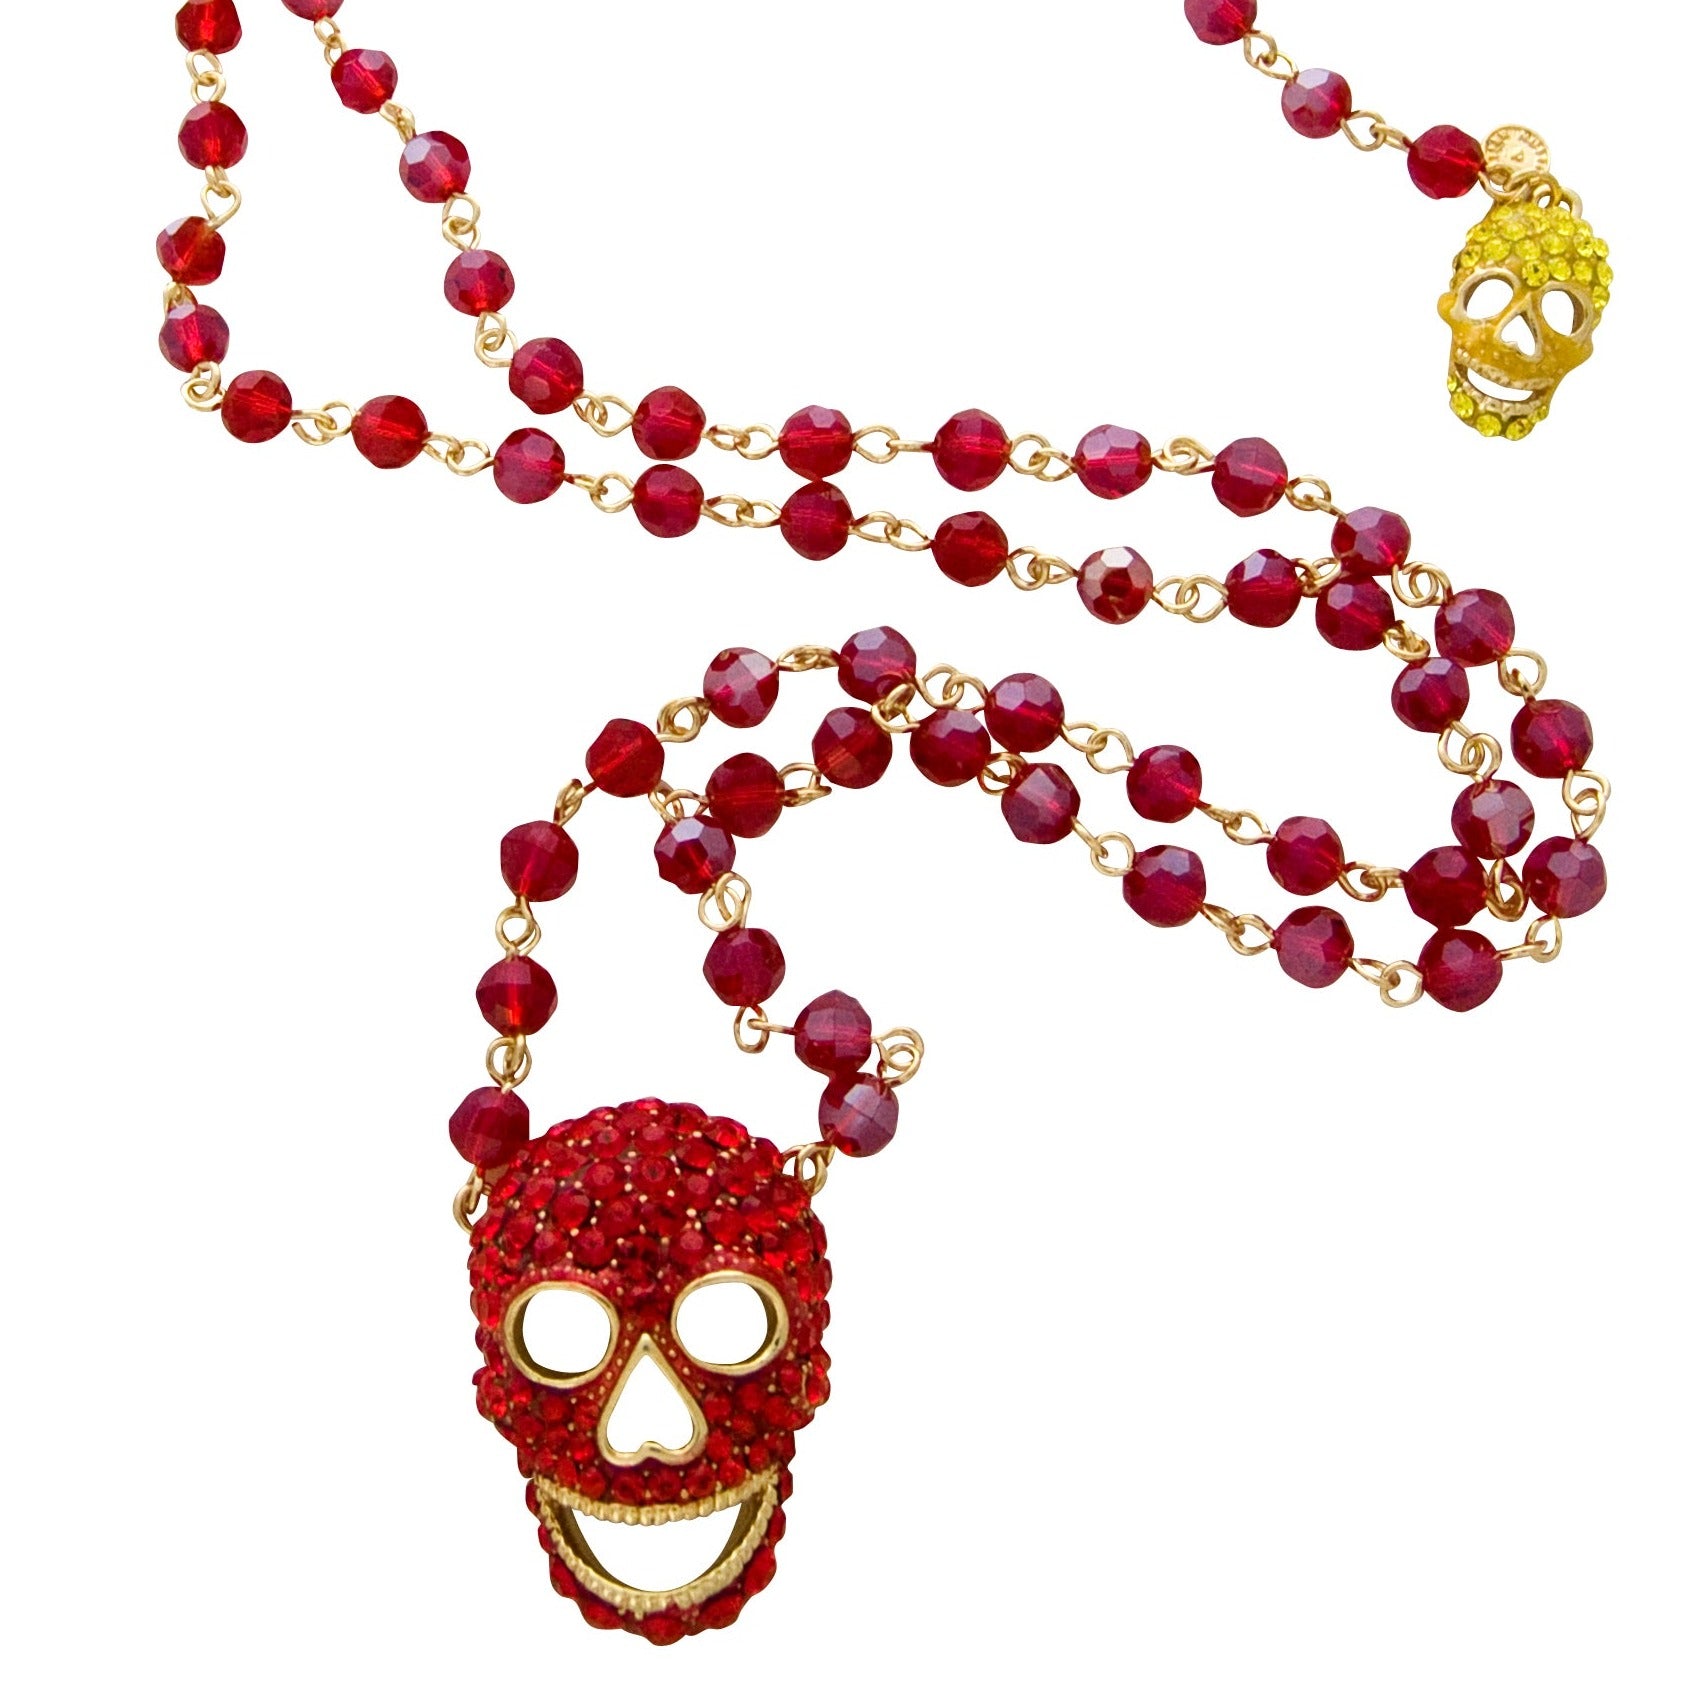 Buy Skull Beads Metal 4/8'' X 3/8'' Online in India - Etsy